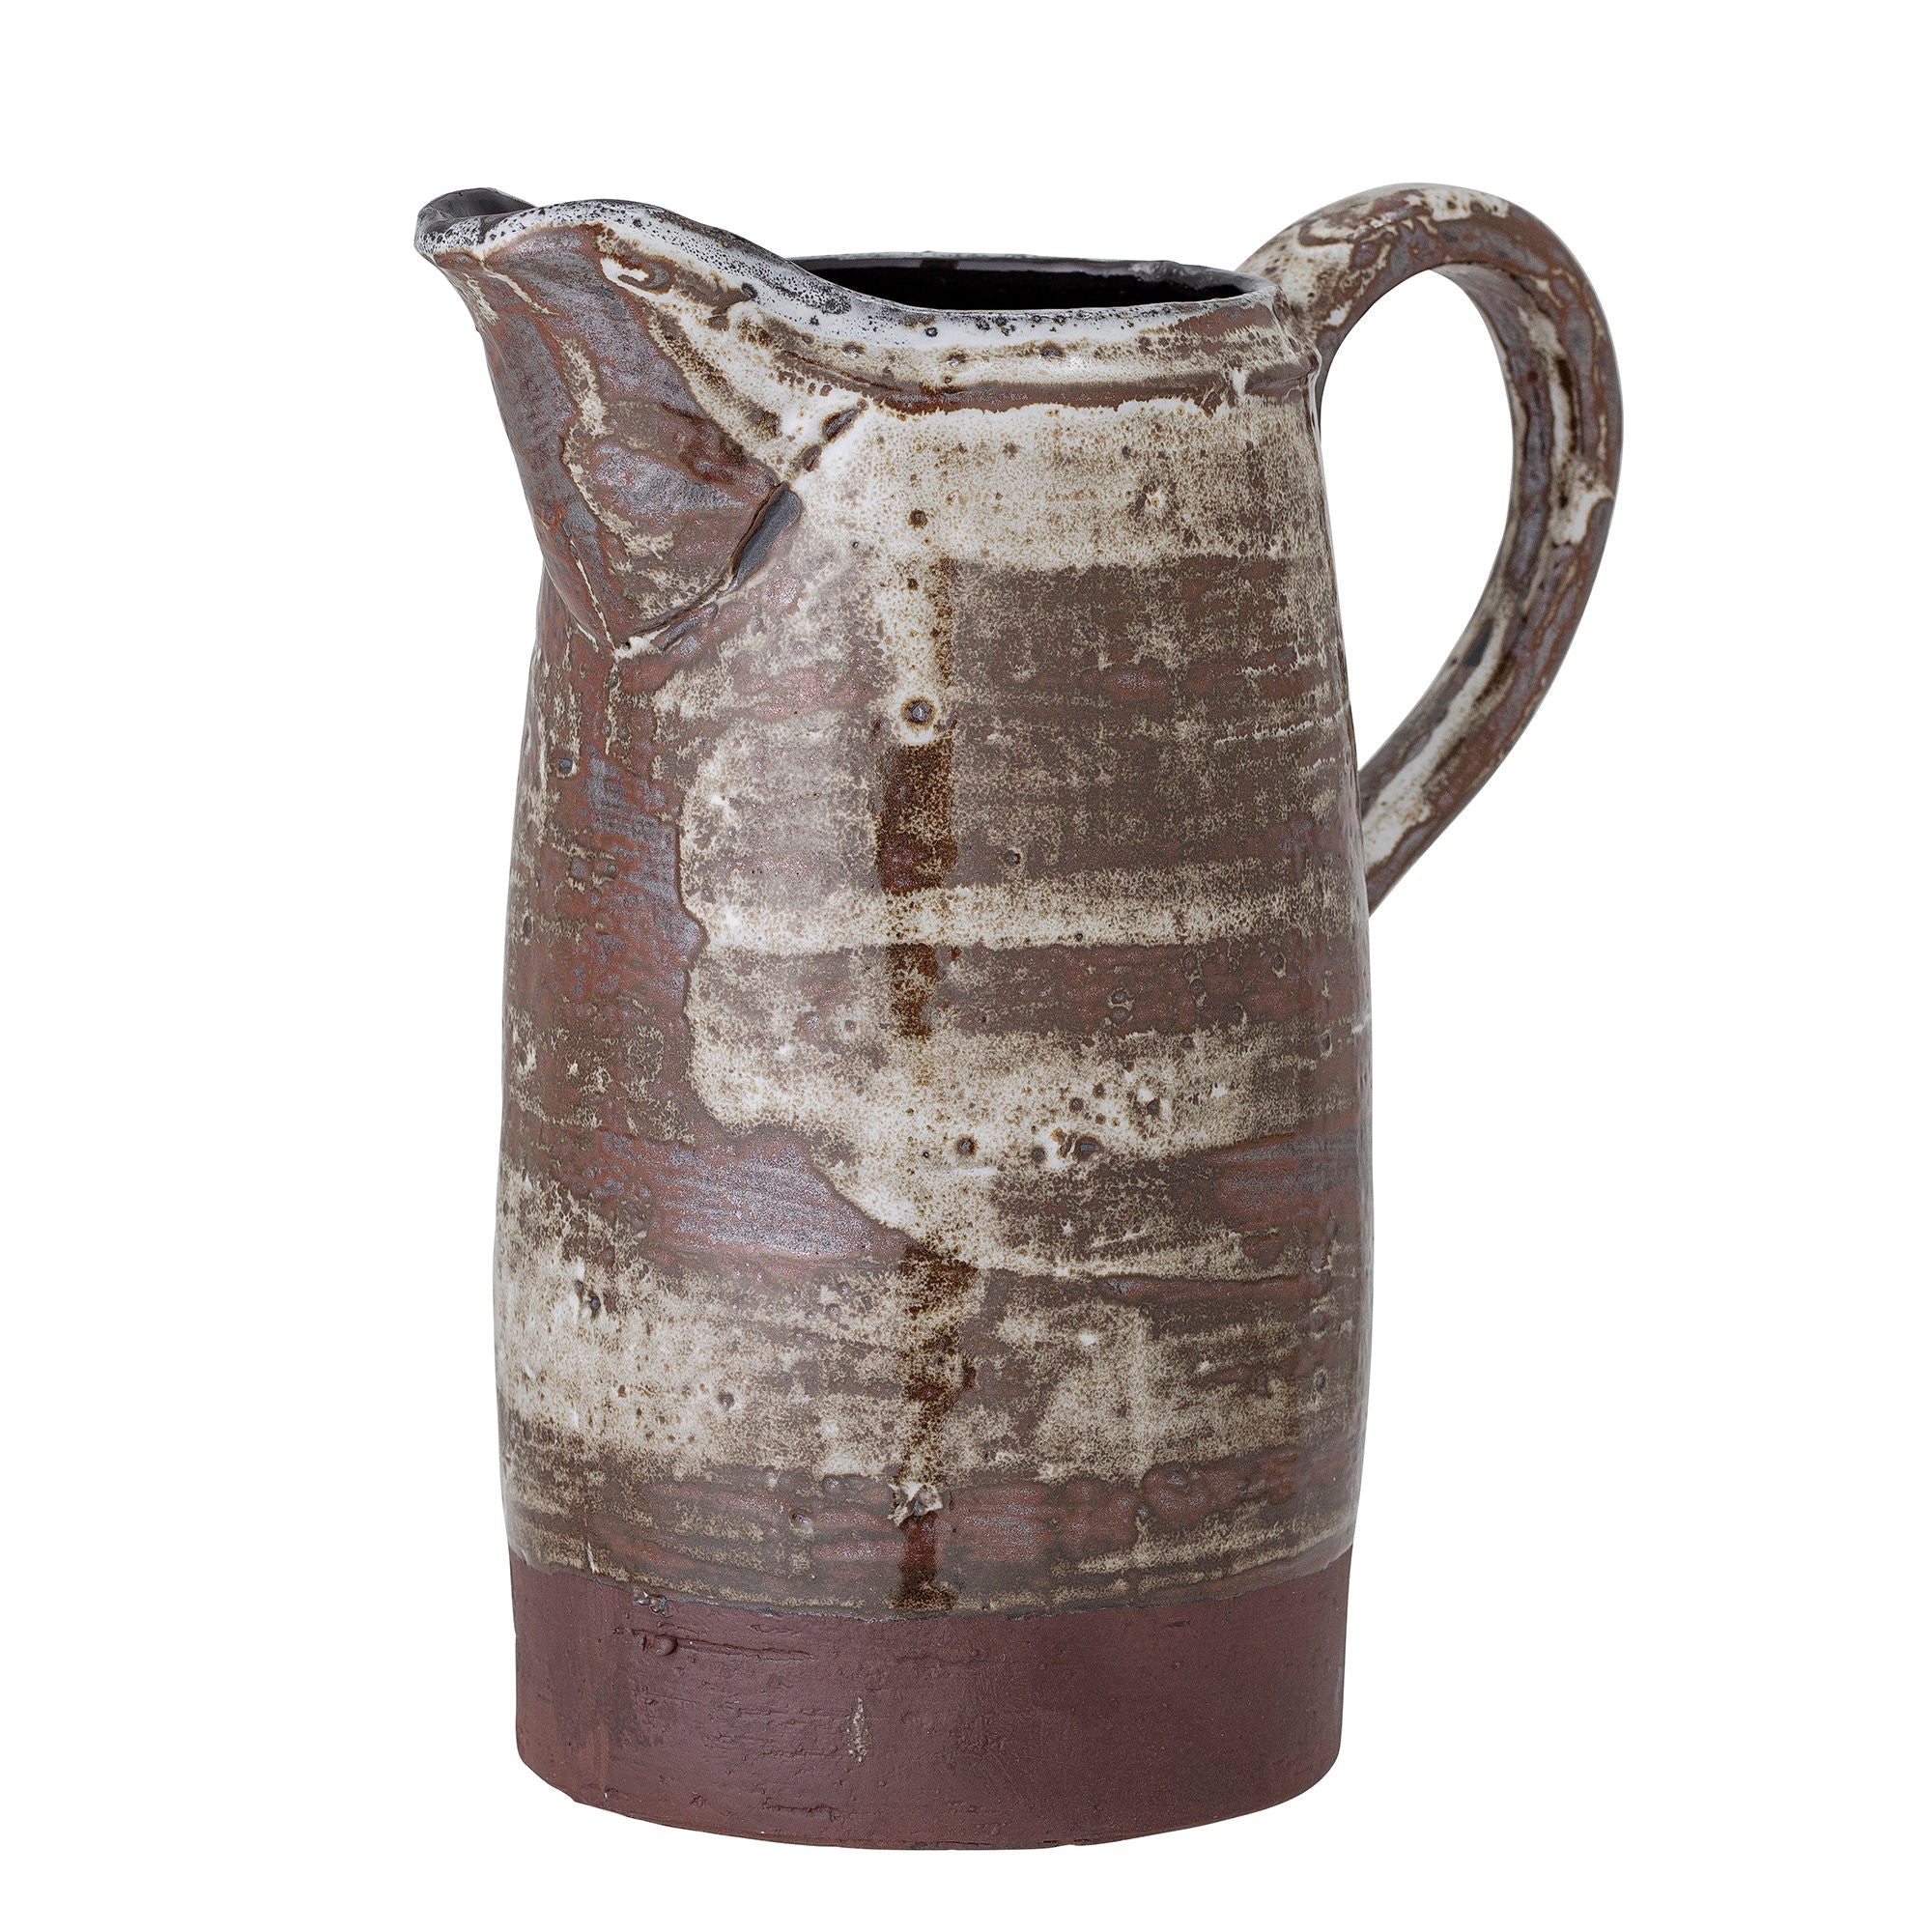 Creative Collection Calla Jug, Brown, Stoneware